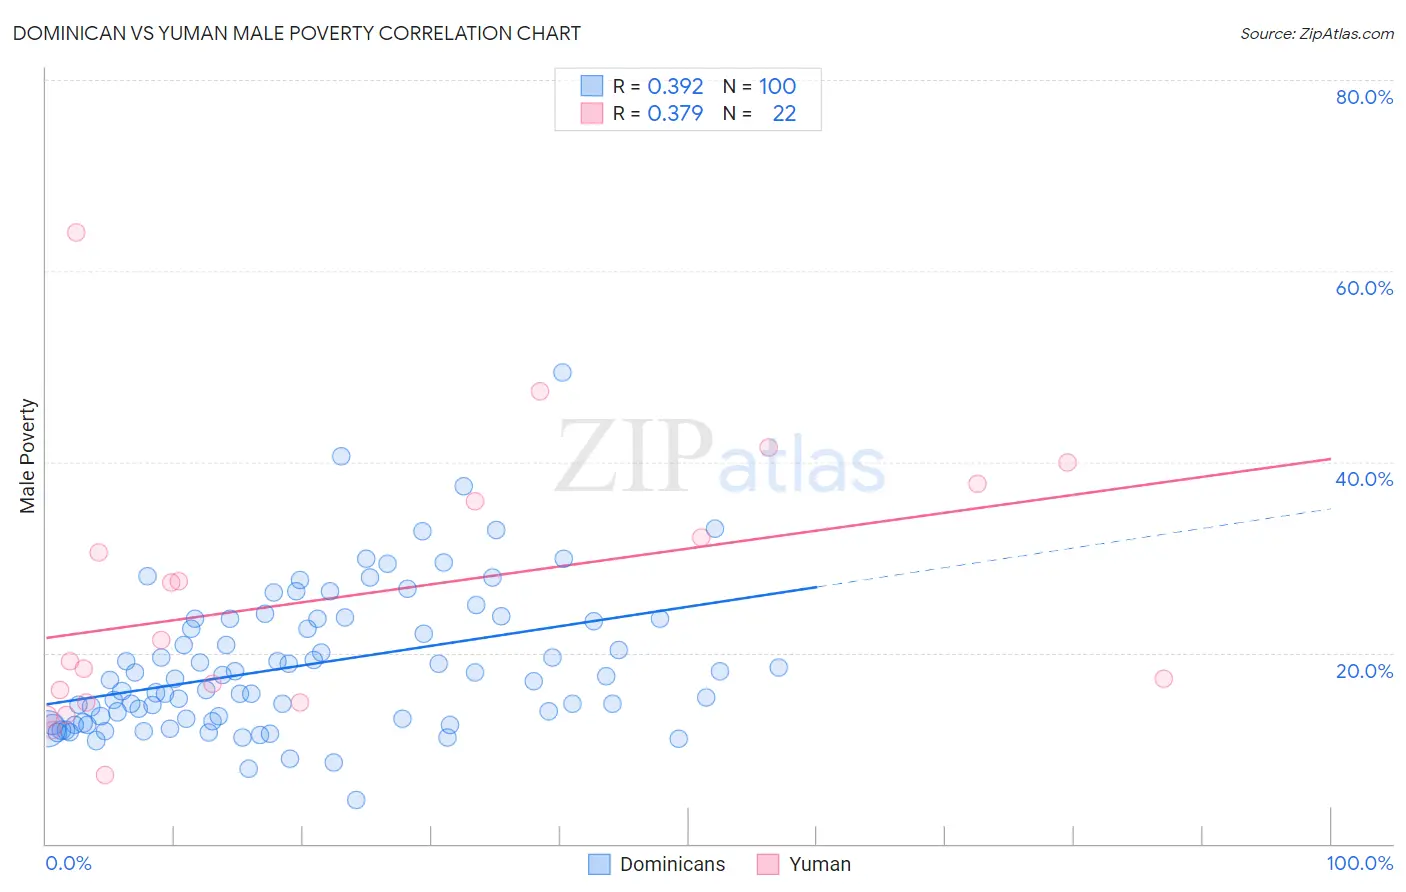 Dominican vs Yuman Male Poverty